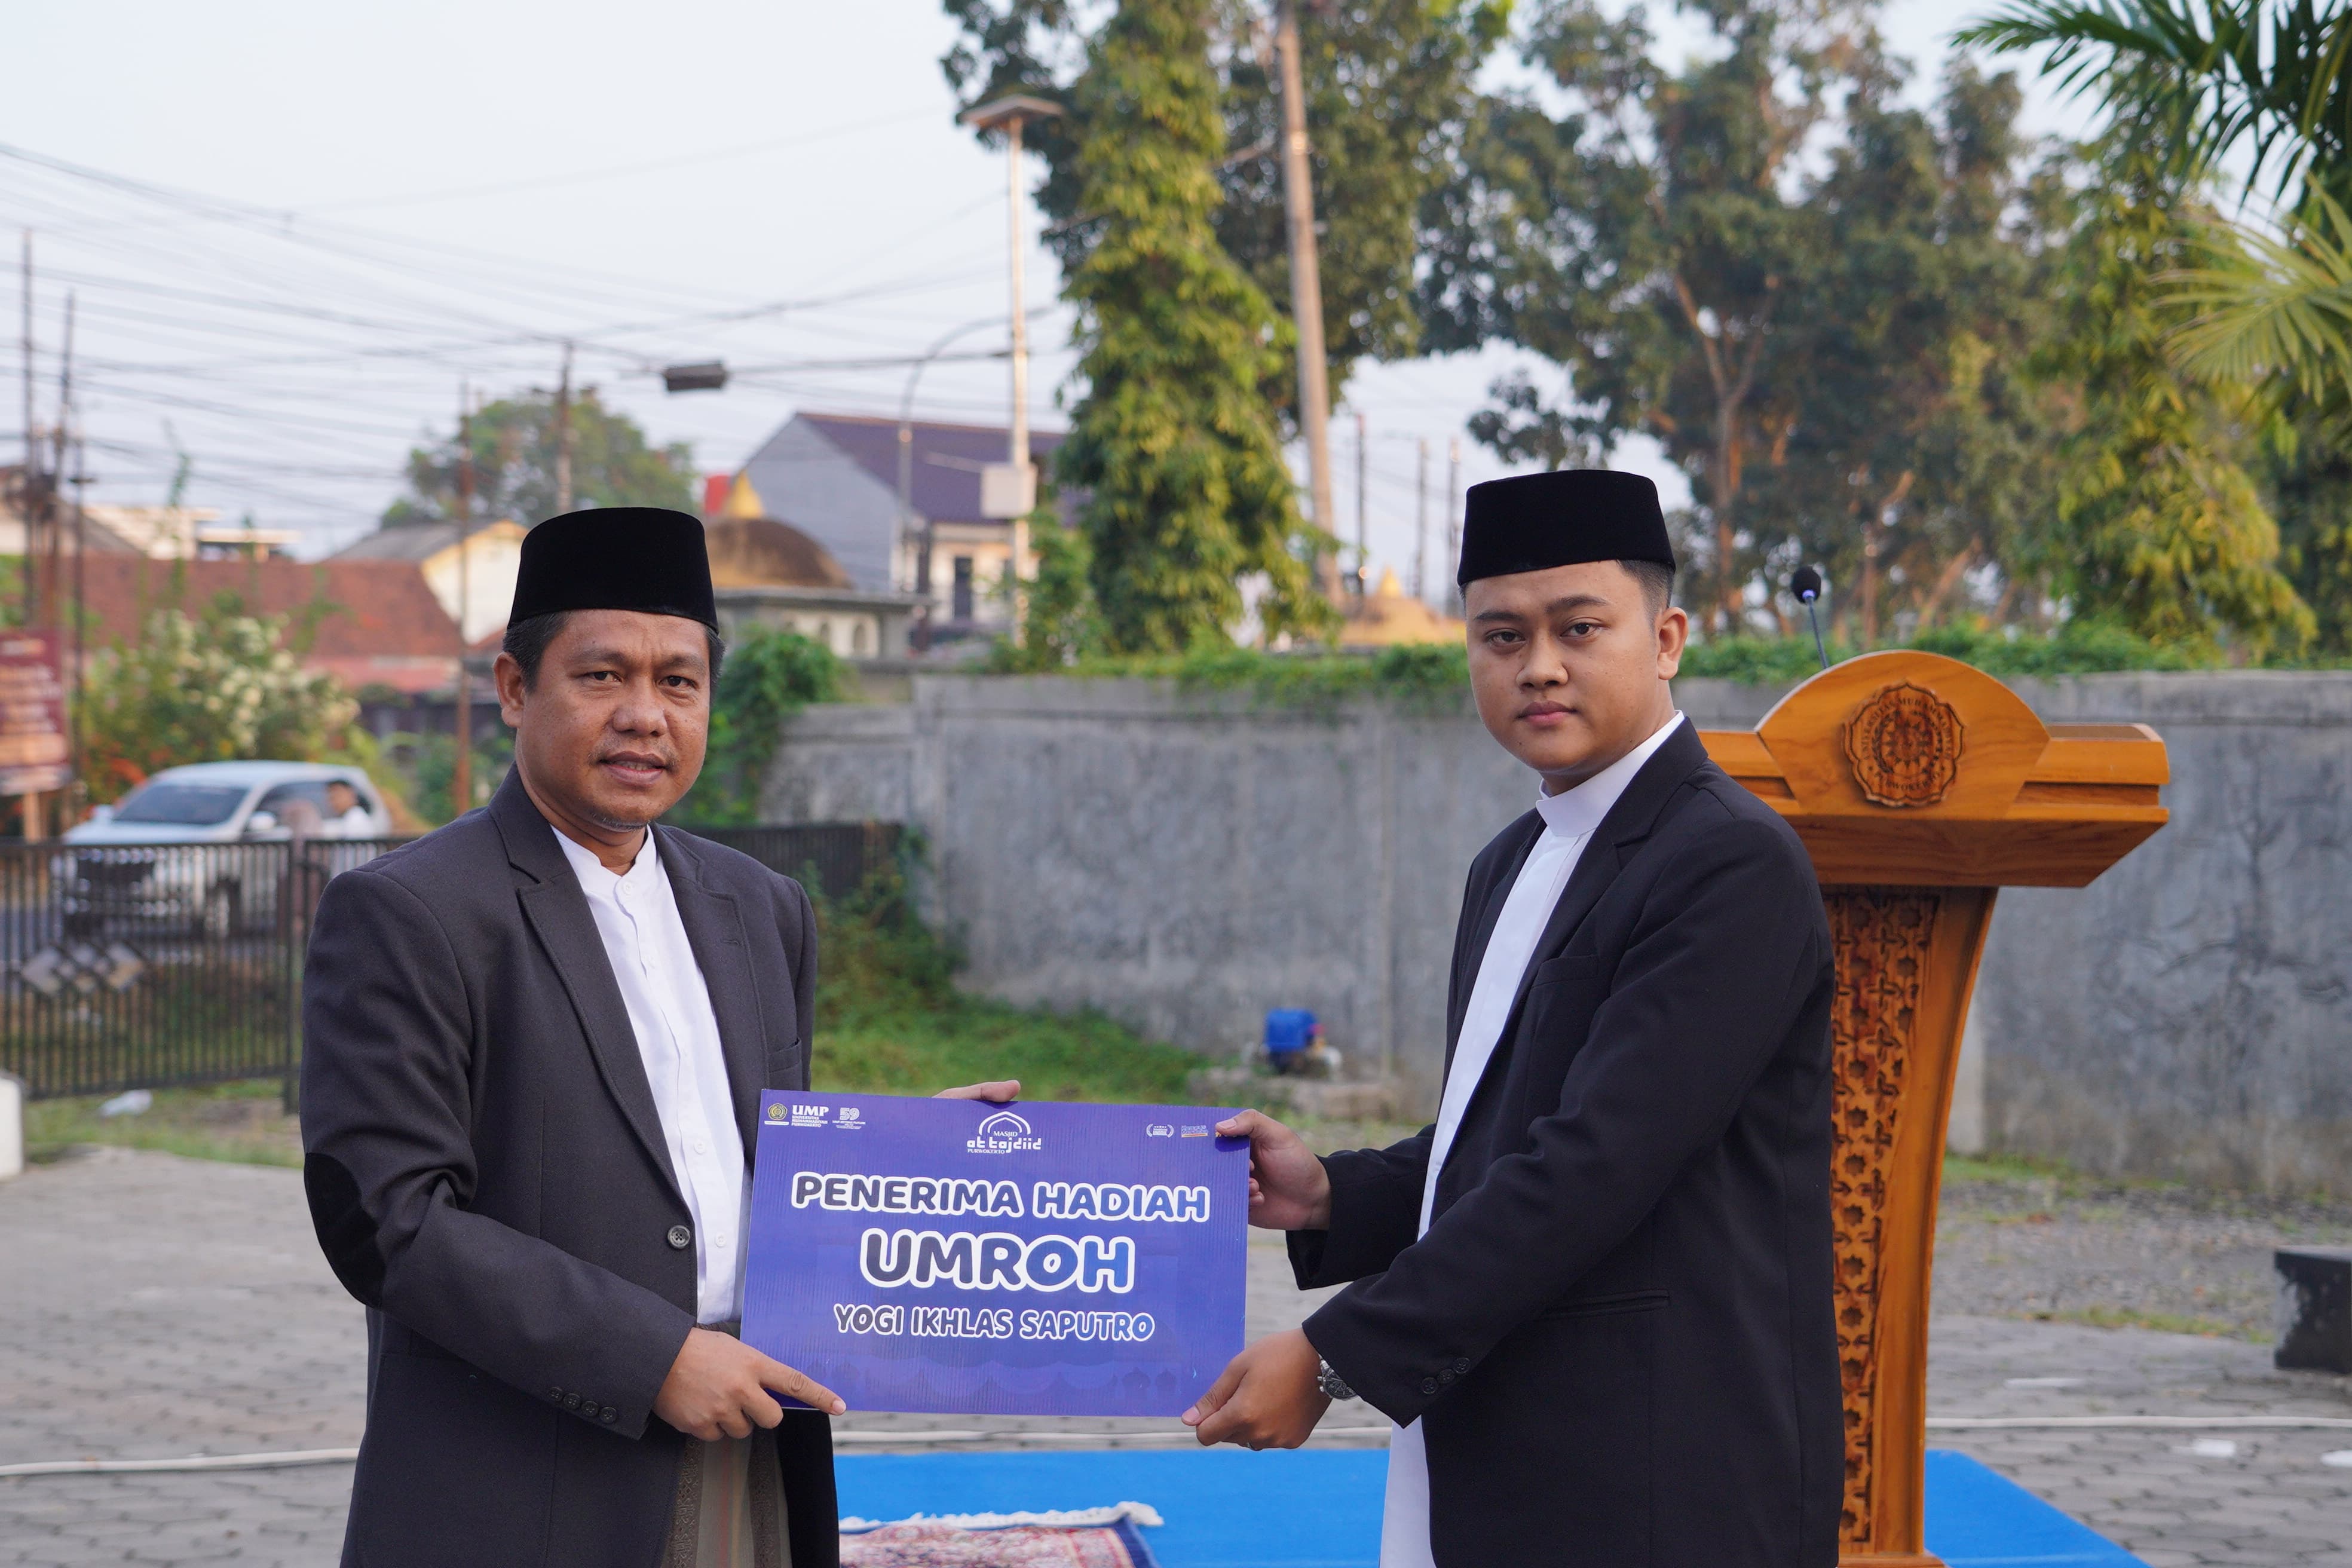 Masjid At-Tajdiid UMP Gelar Sholat Idul Adha, Berikan Hadiah Umroh kepada Ustadz Yogi Ikhlas Saputra